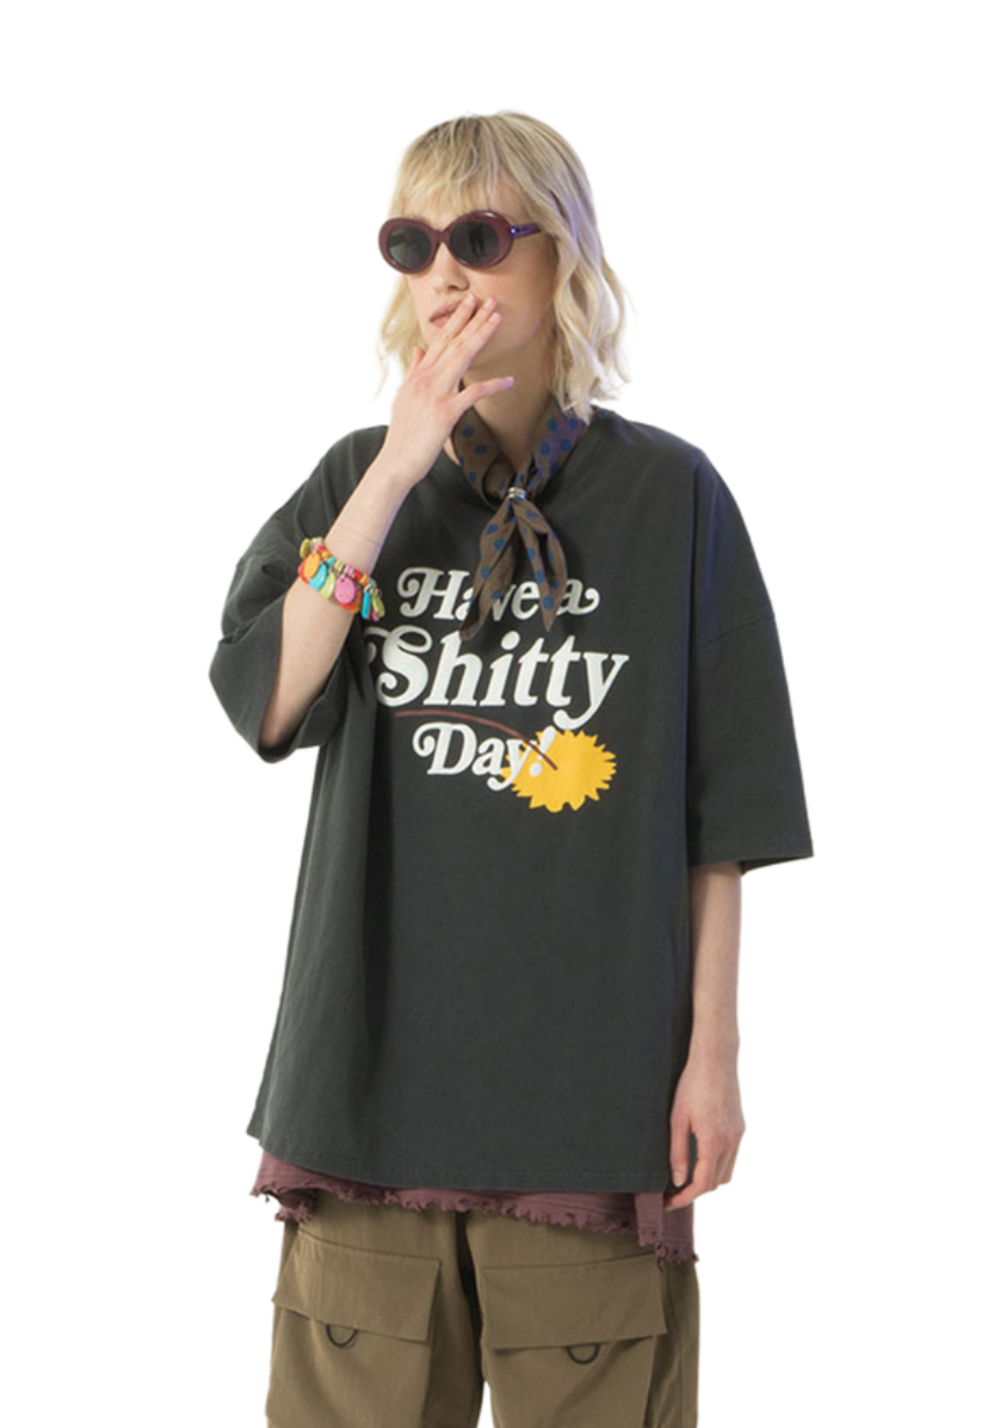 “Have A Shitty Day” T-Shirt - PSYLOS 1